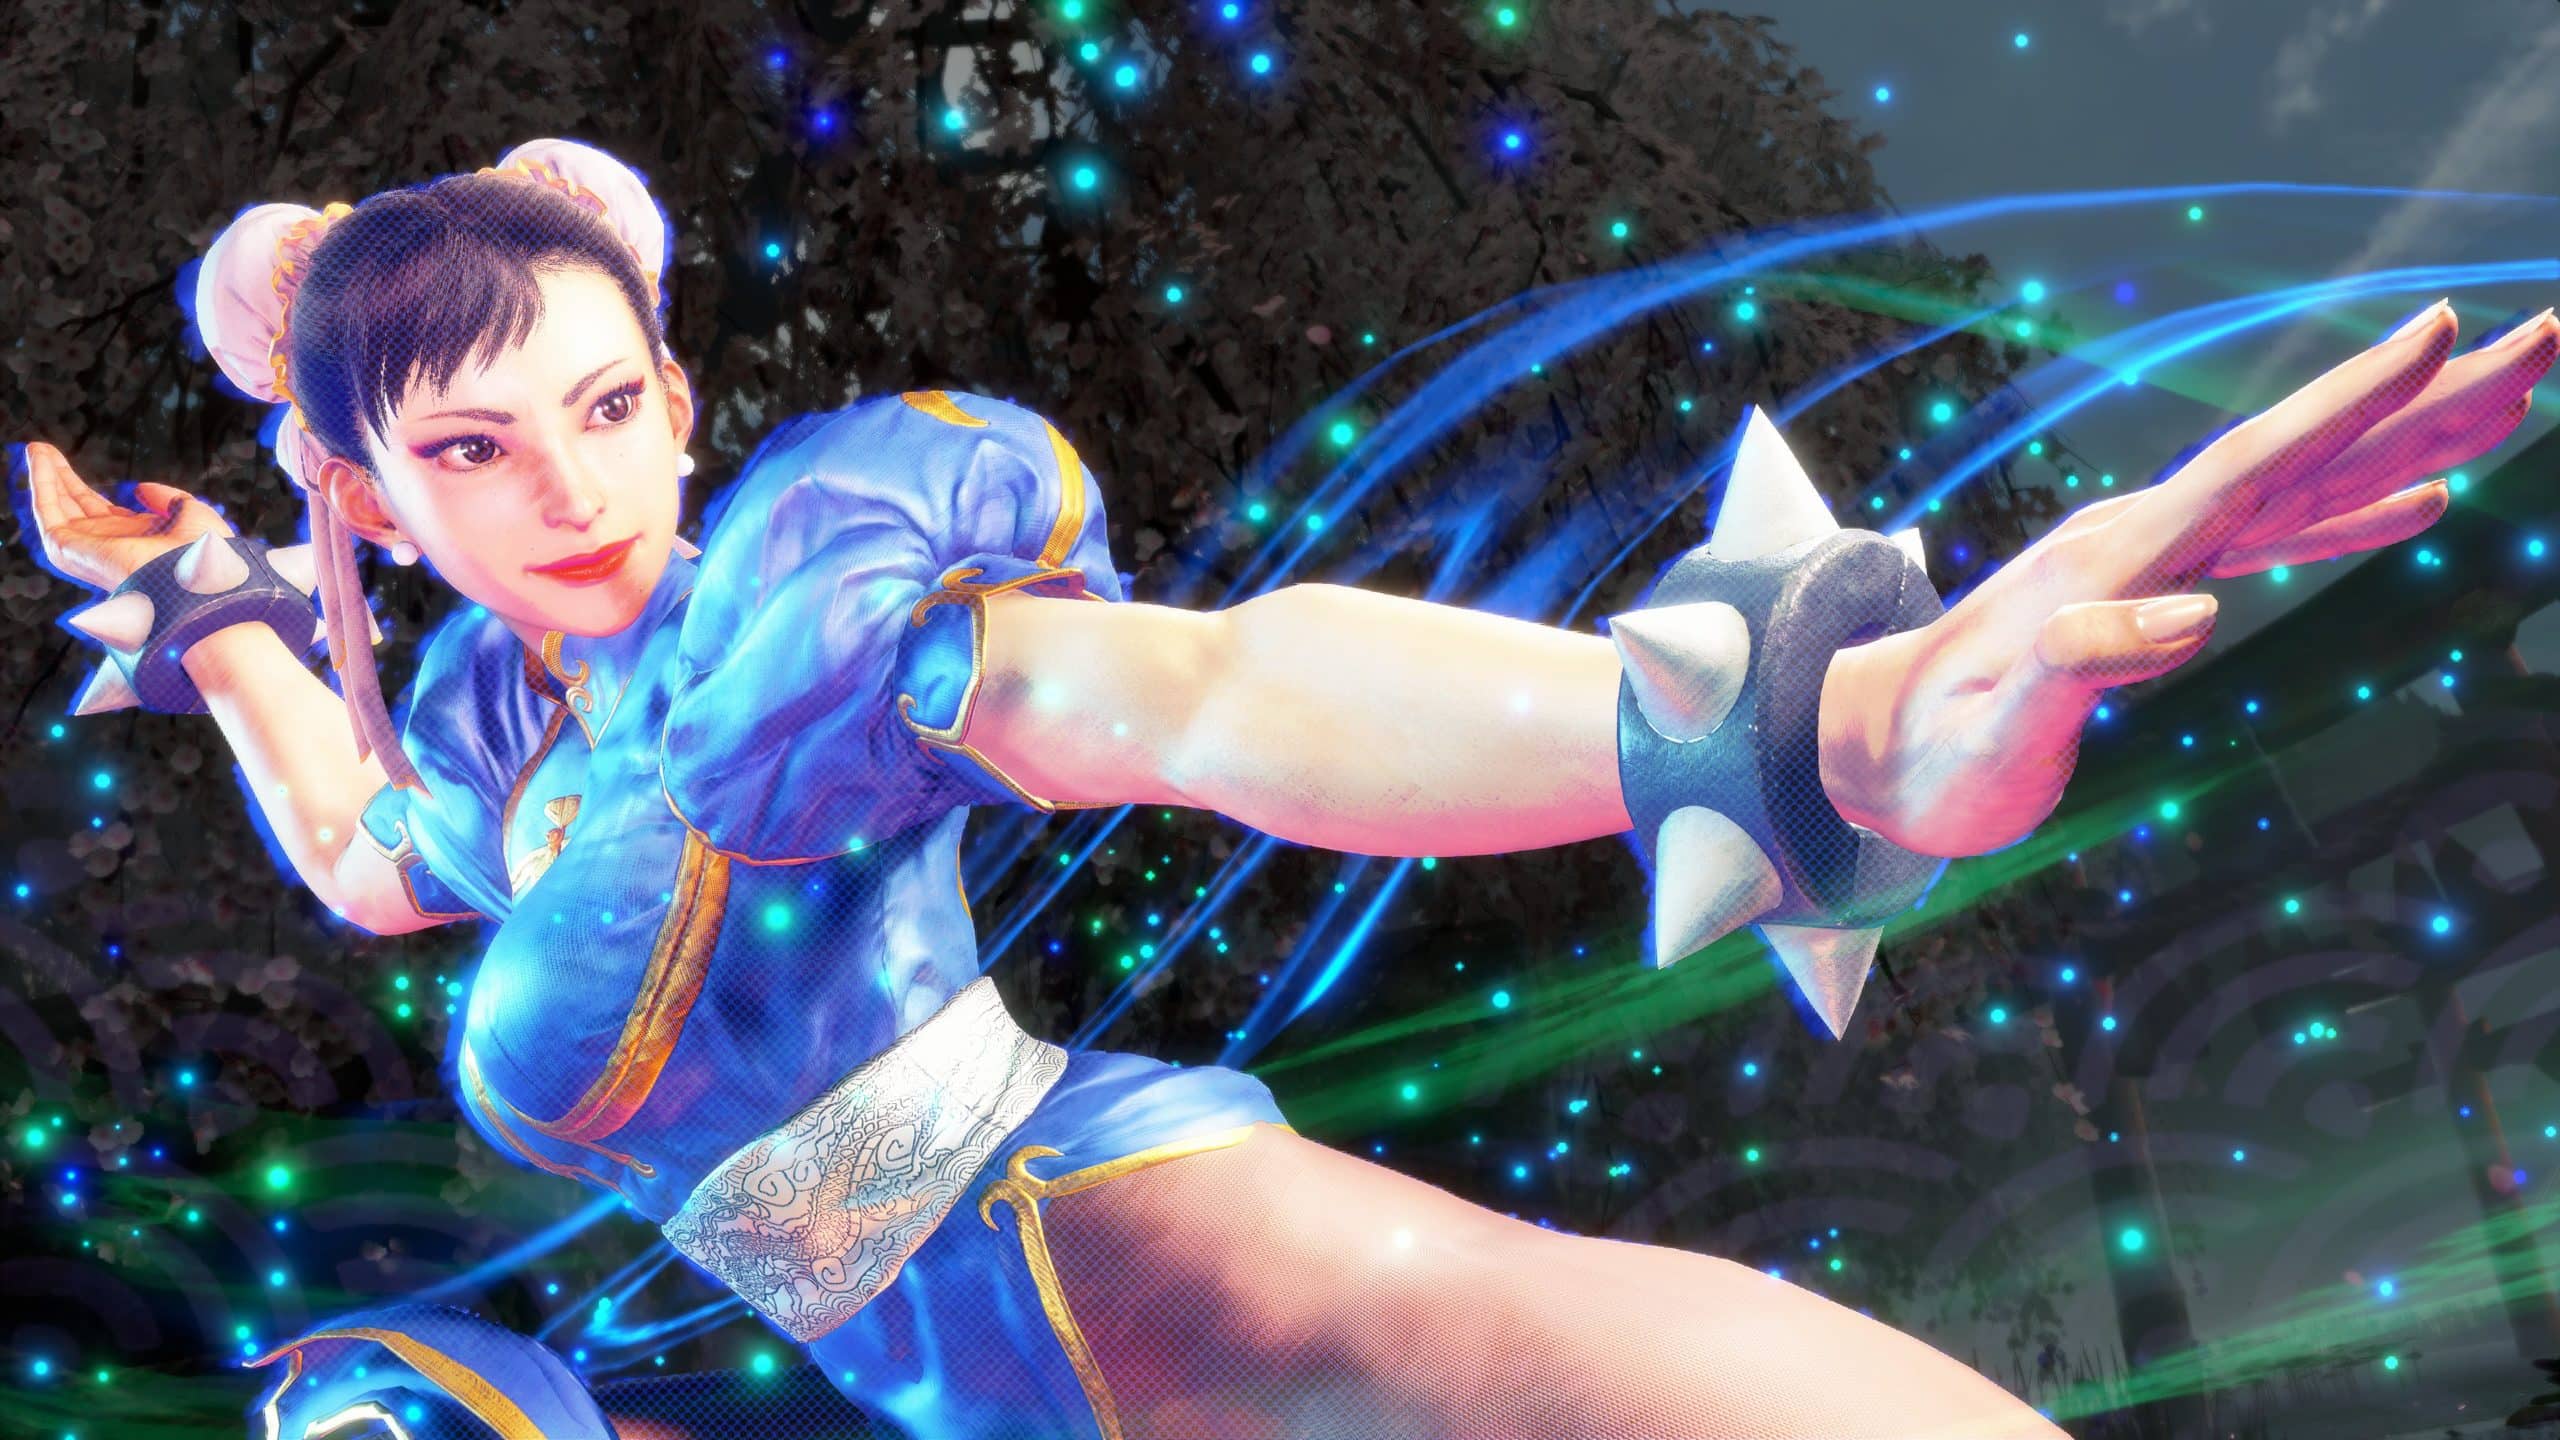 Street Fighter 6 closed beta datamining allegedly reveals new